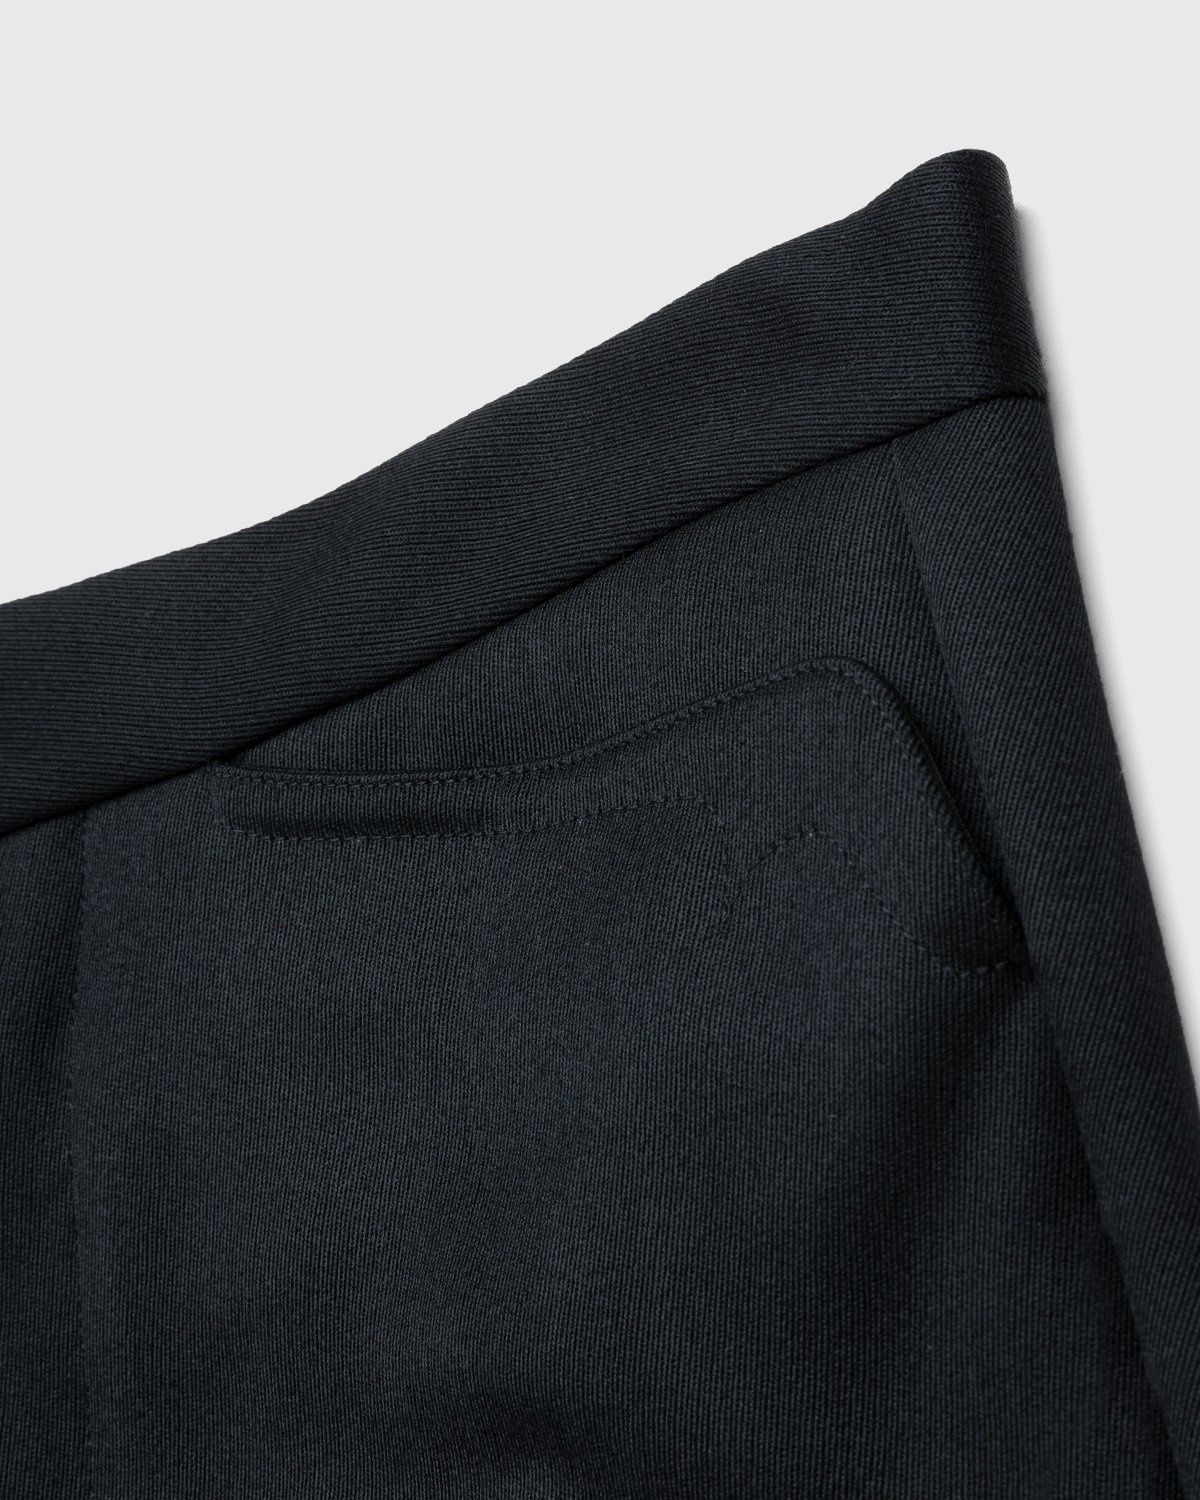 Maison Margiela – Gabardine Trousers Black - Trousers - Black - Image 5